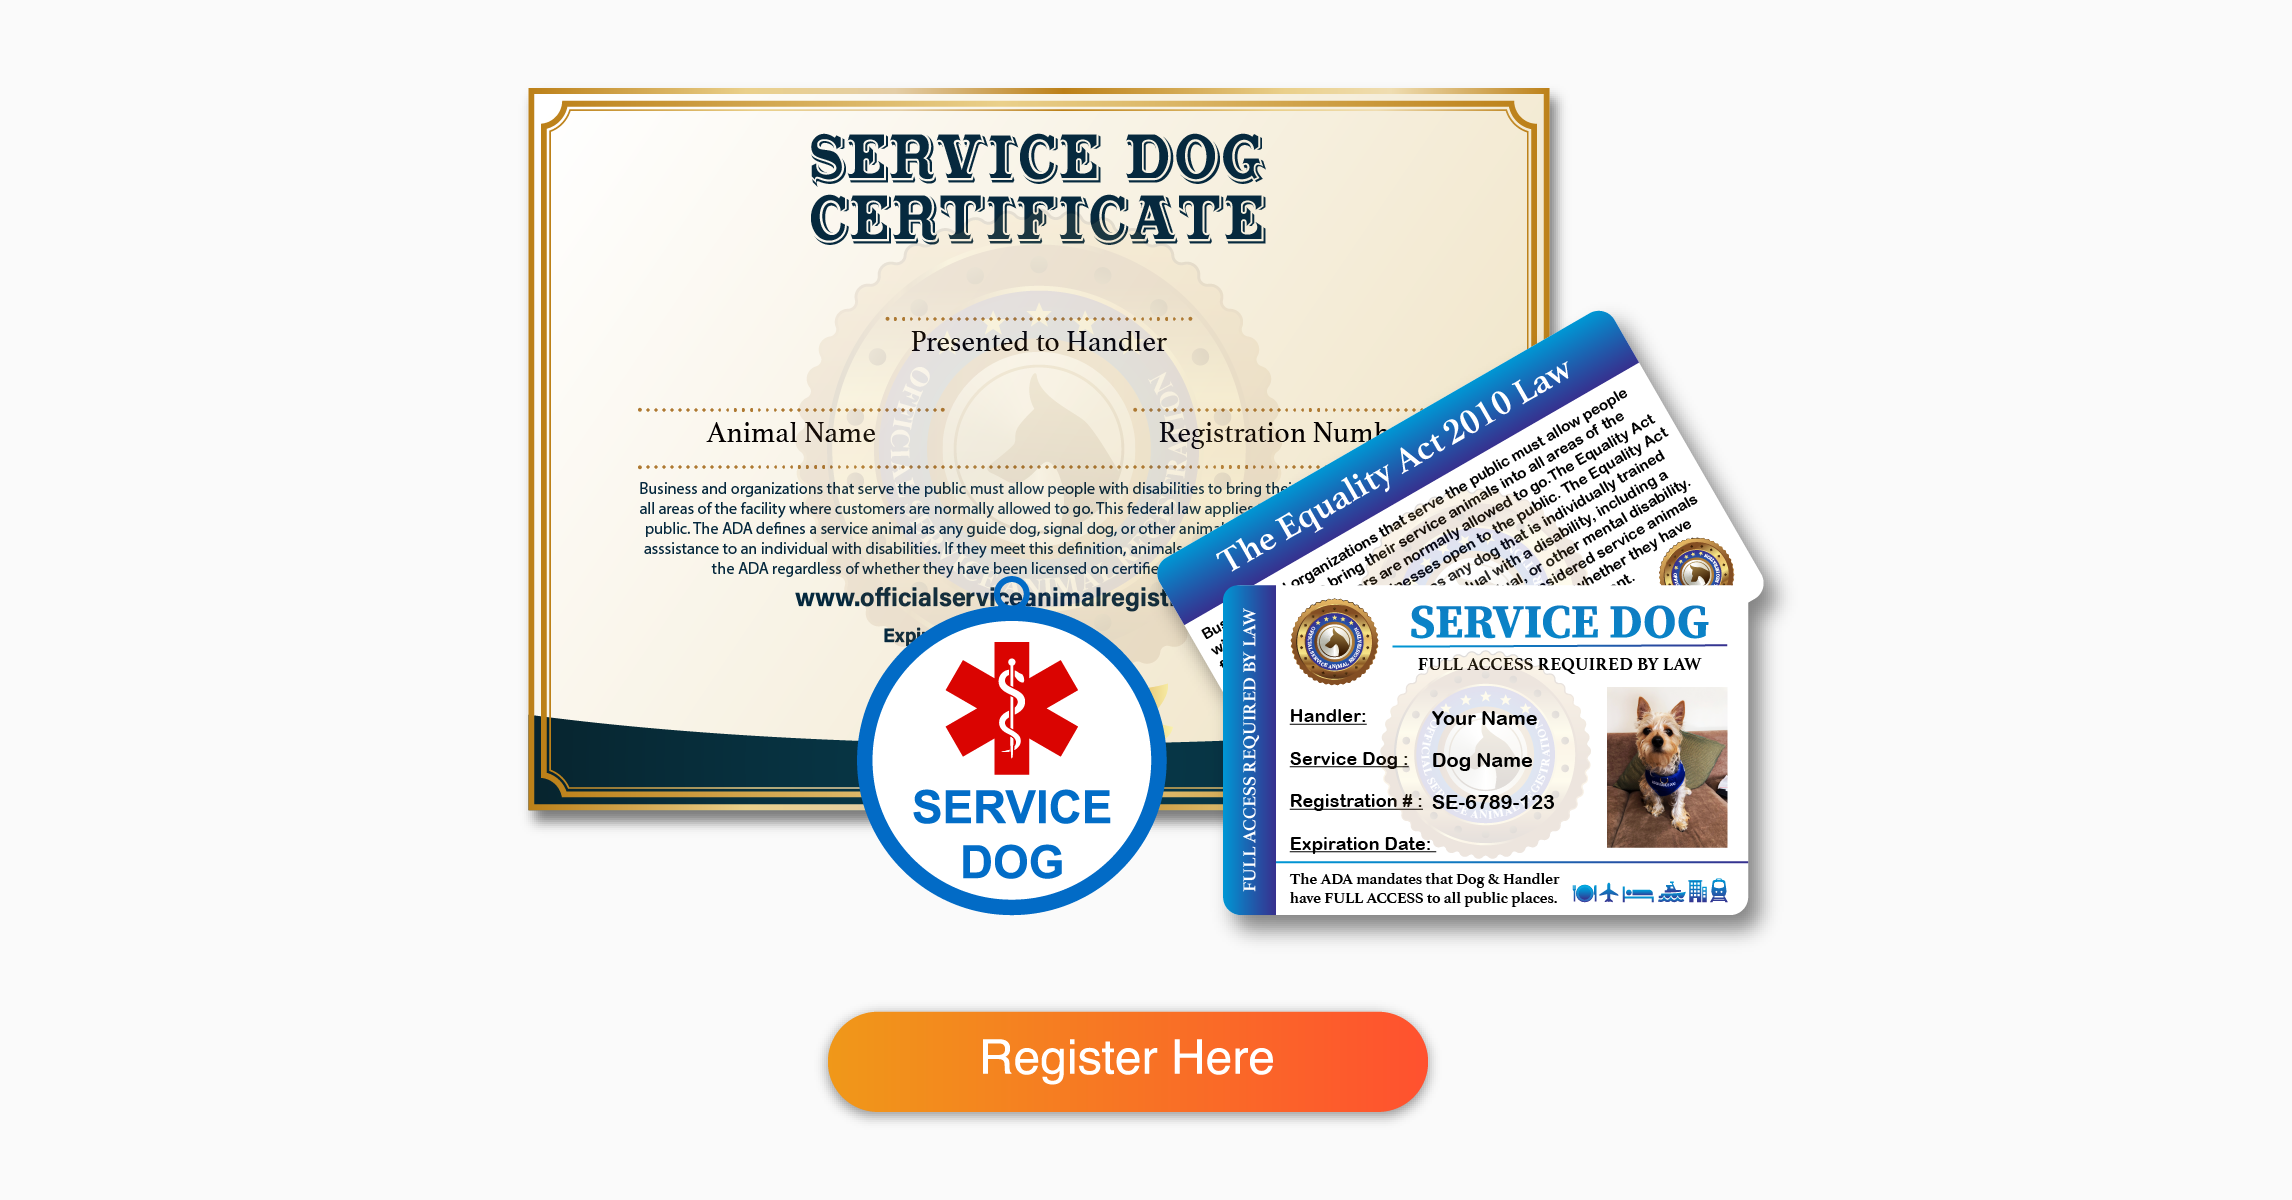 Can I Get a Service Dog Certification Online?